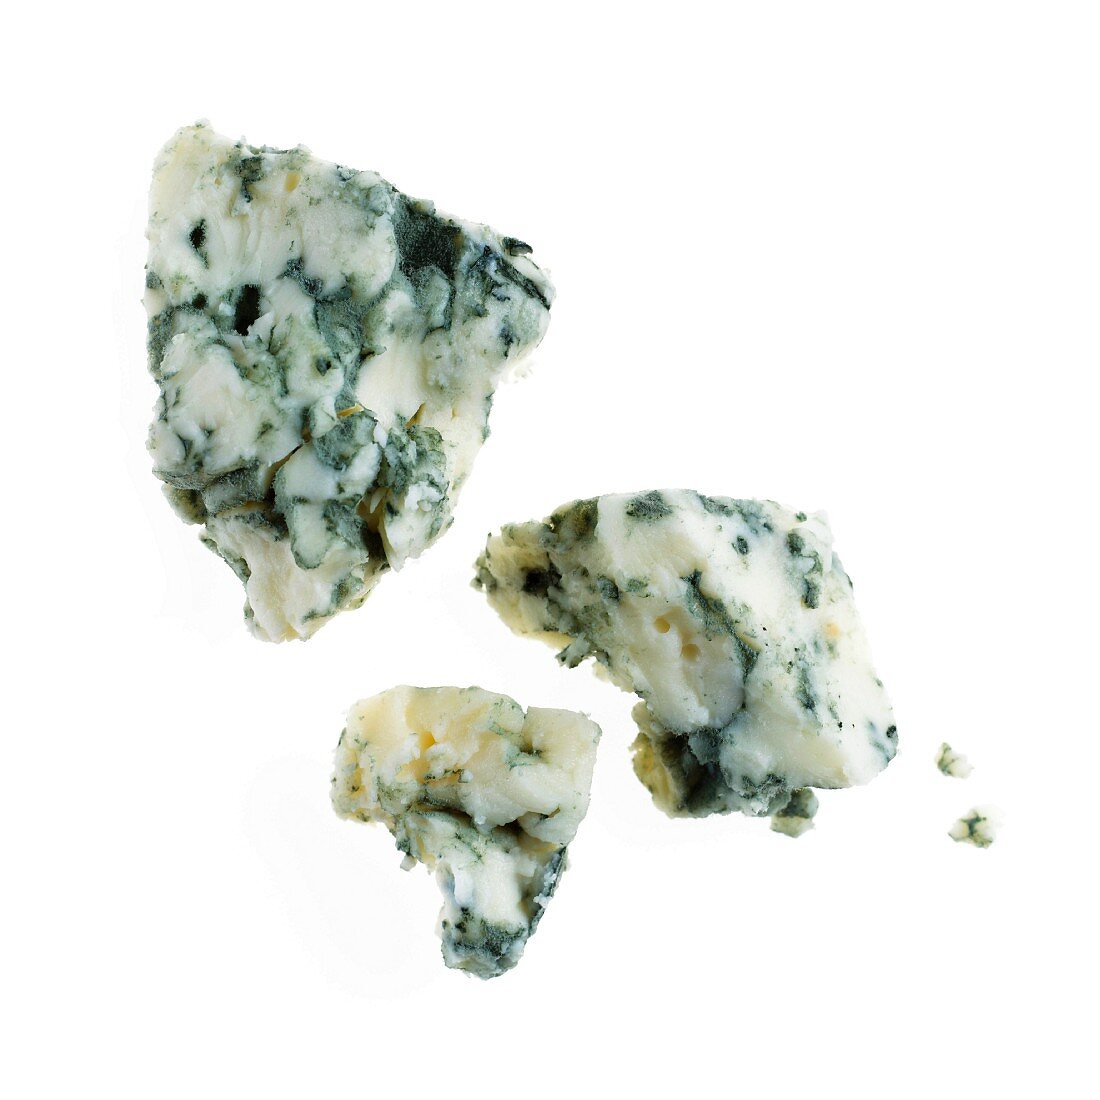 Crumbled Blue Cheese